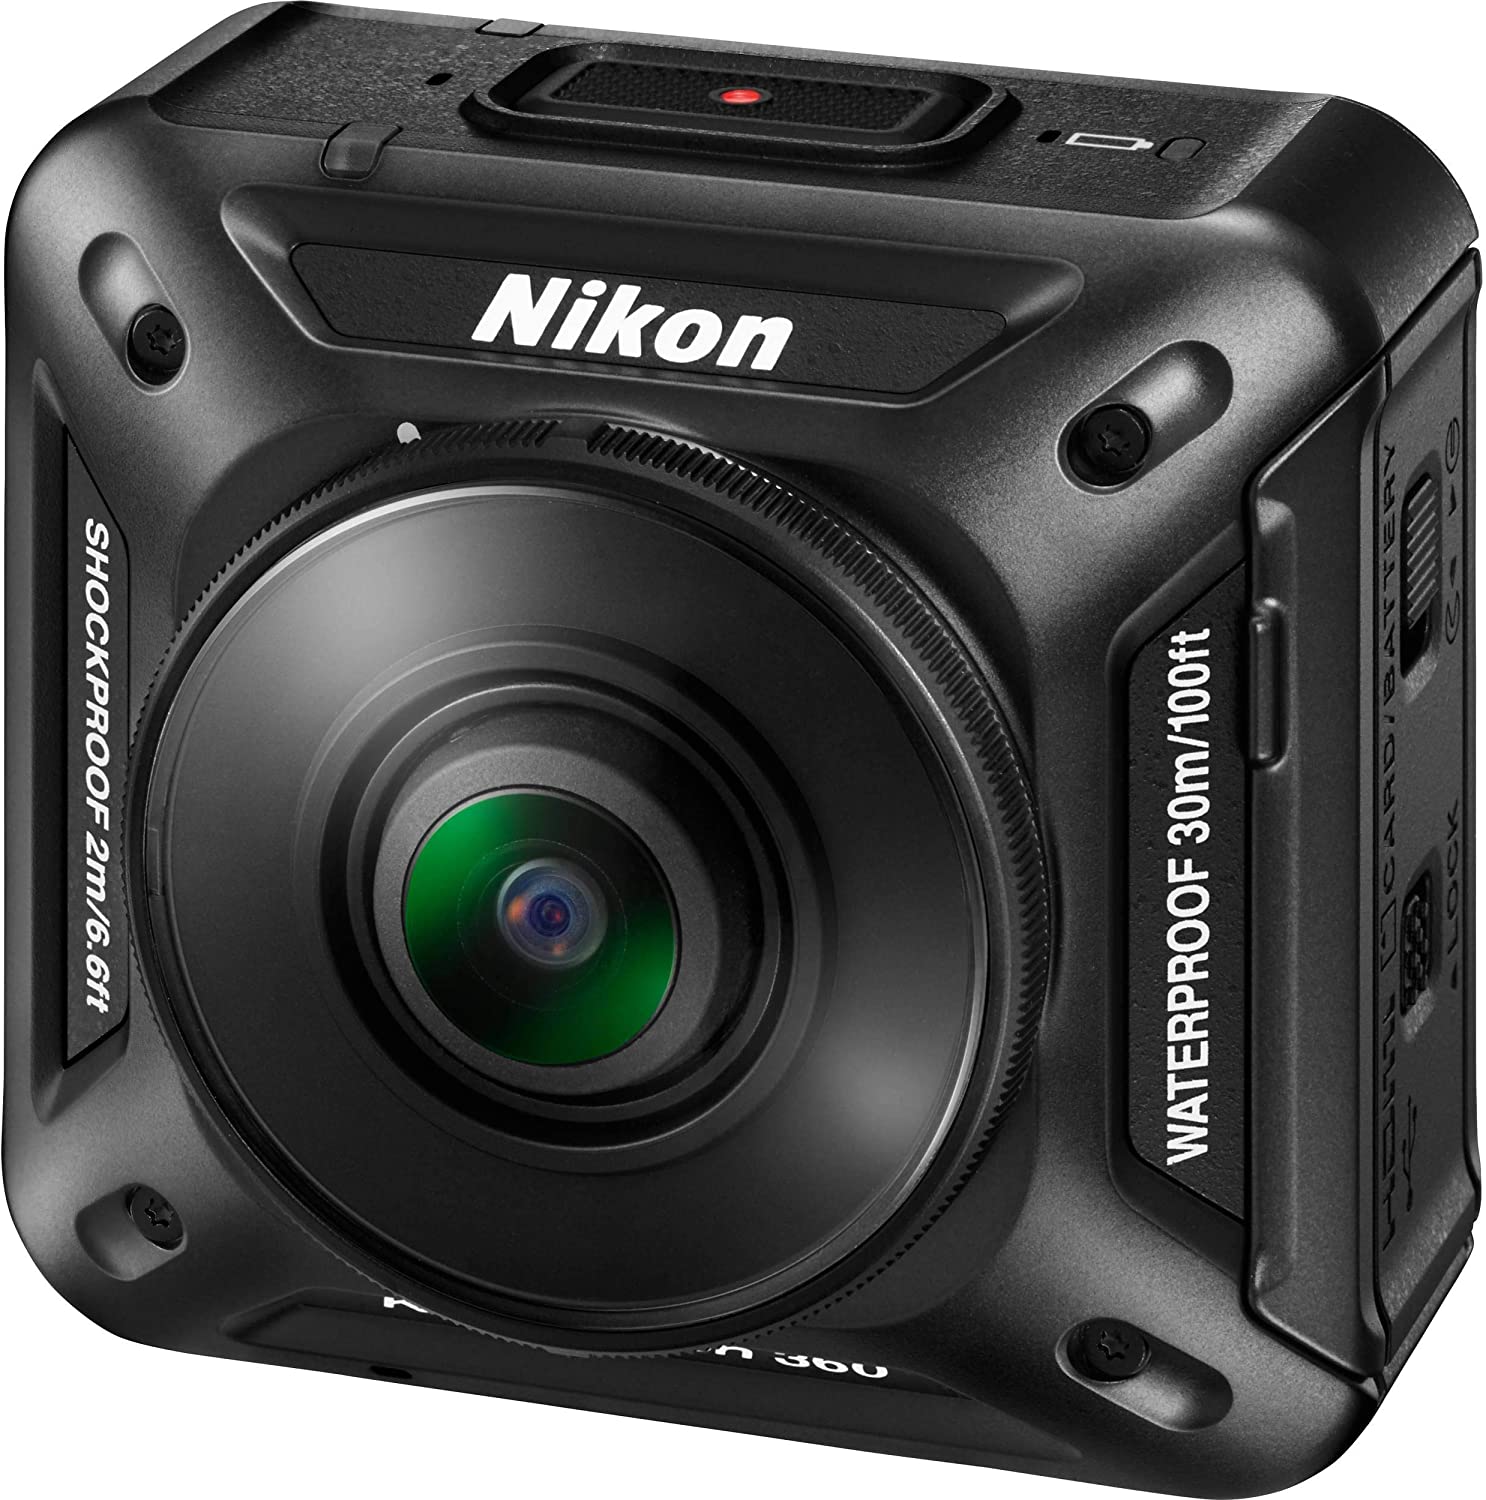 Nikon keymission 360 action camera